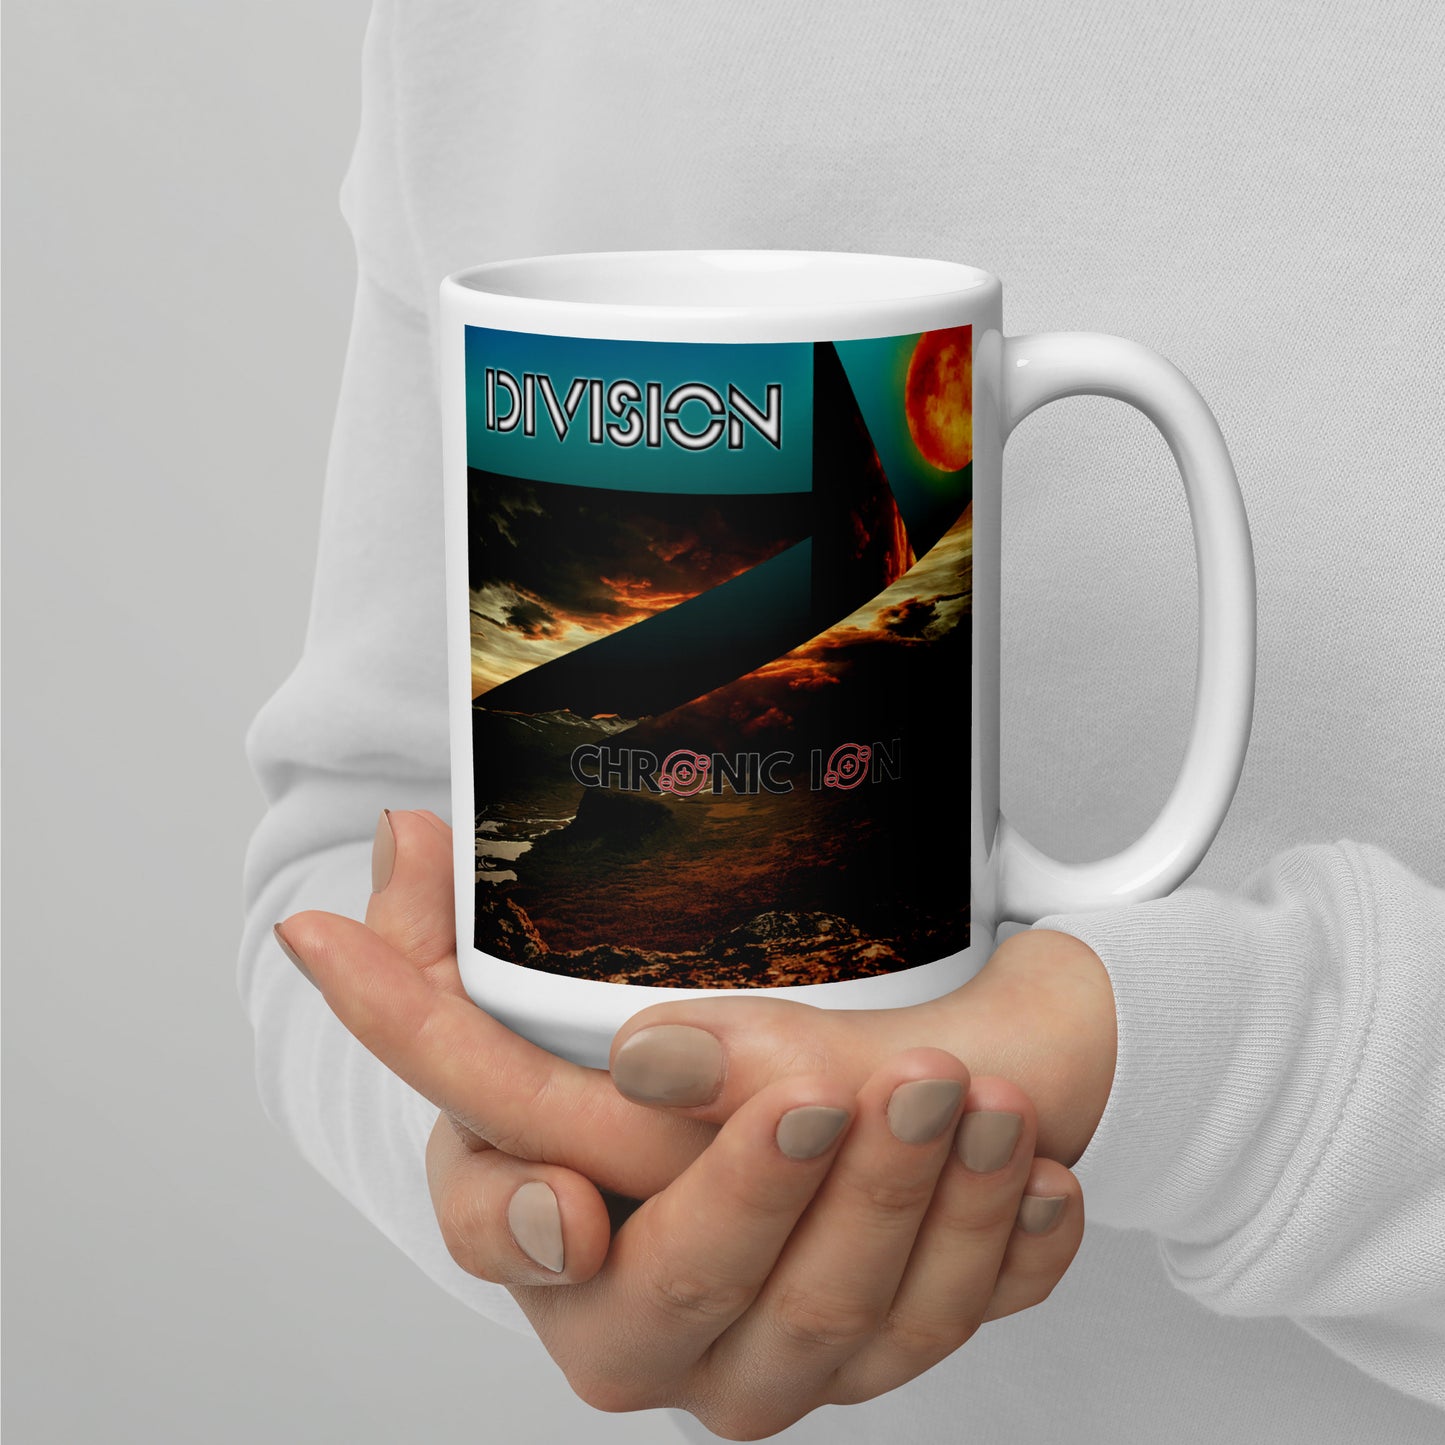 Chronic Ion - Division White Glossy Mug